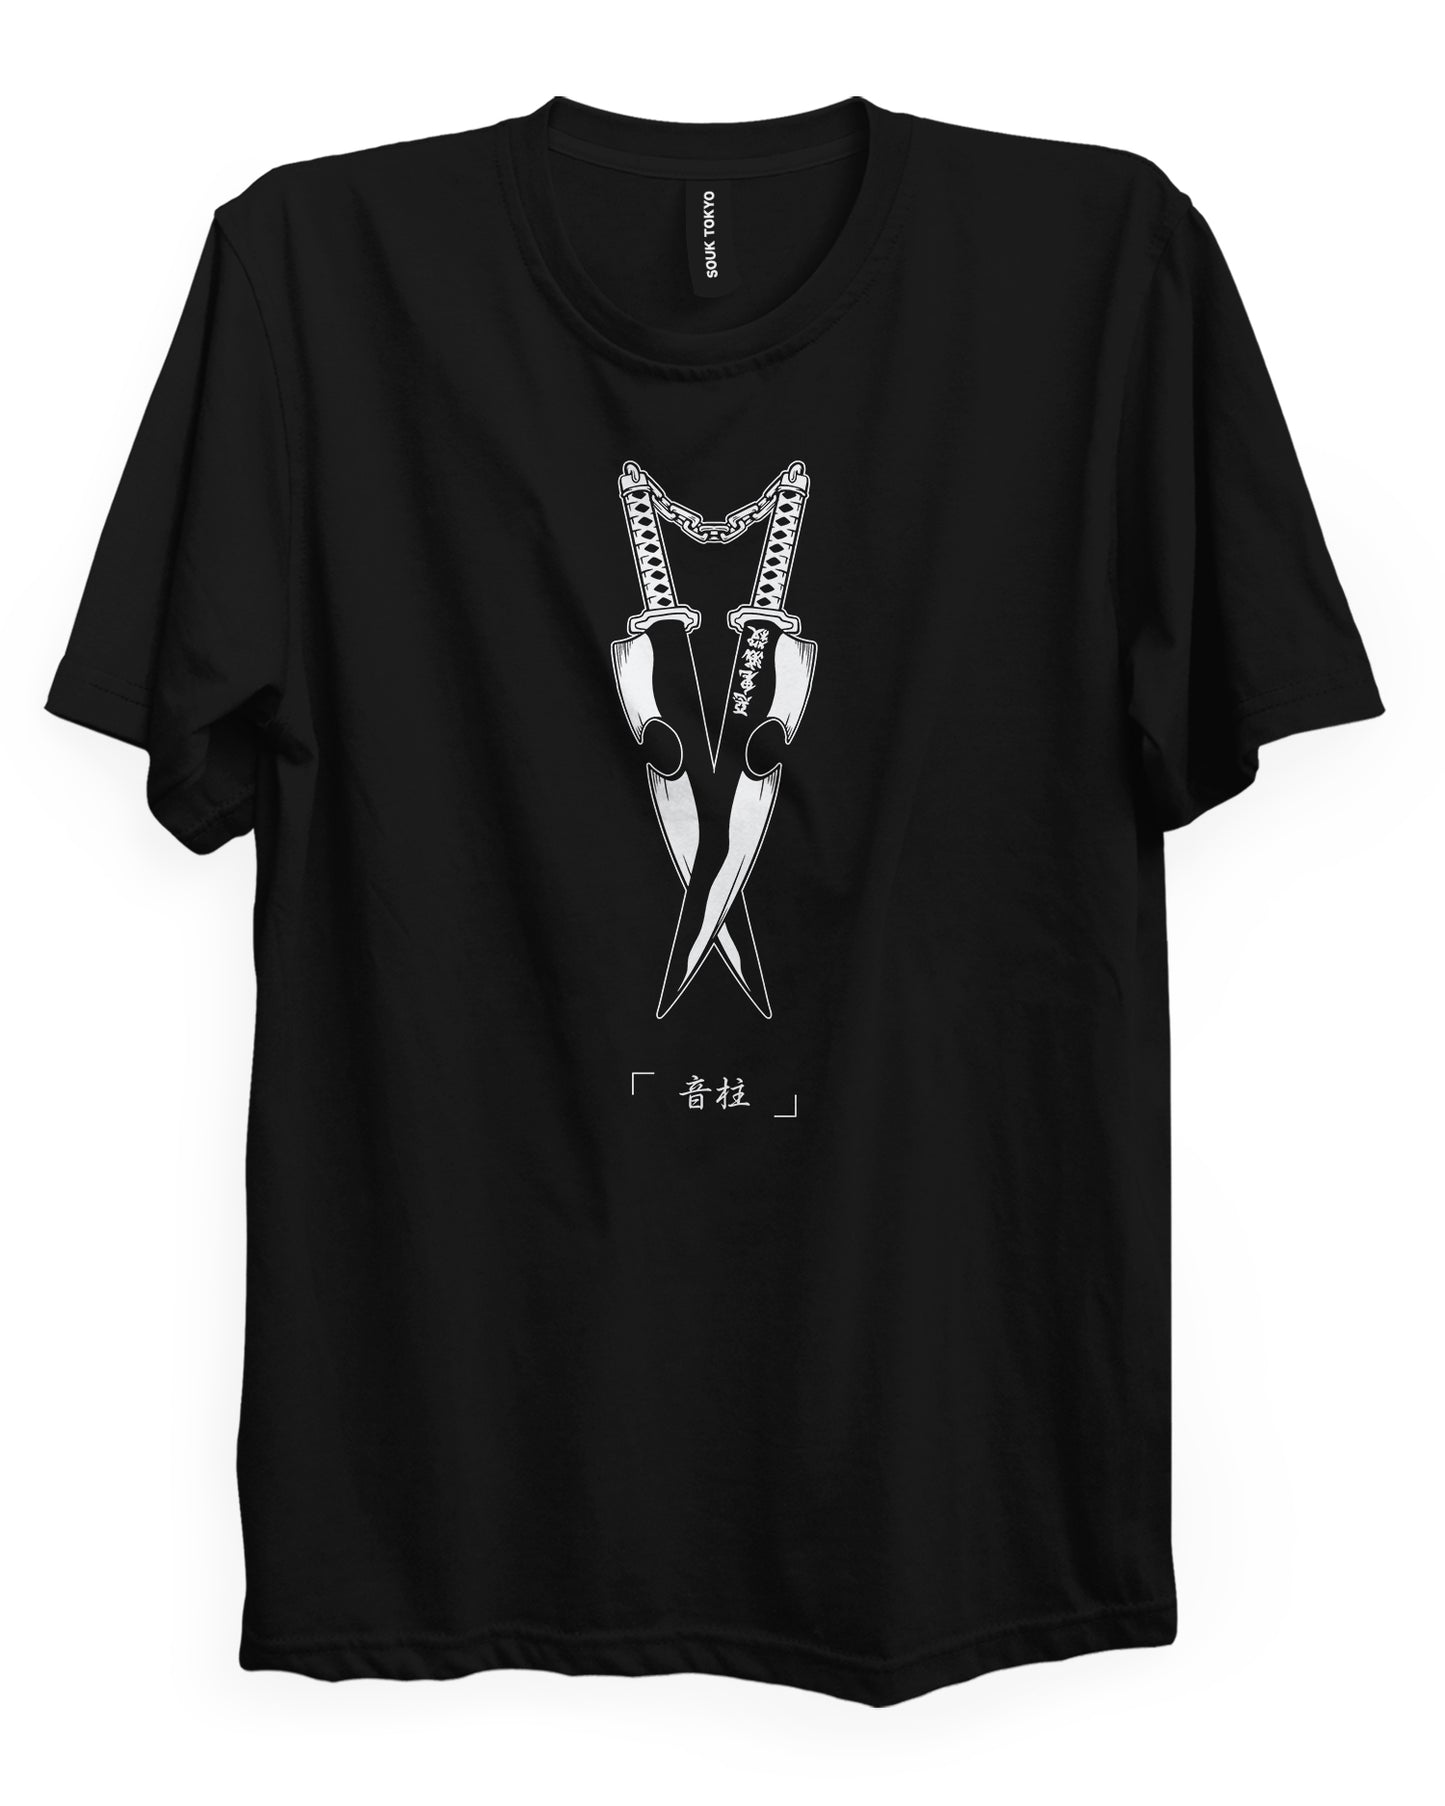 Sound Hashira (Tengen) T-Shirt